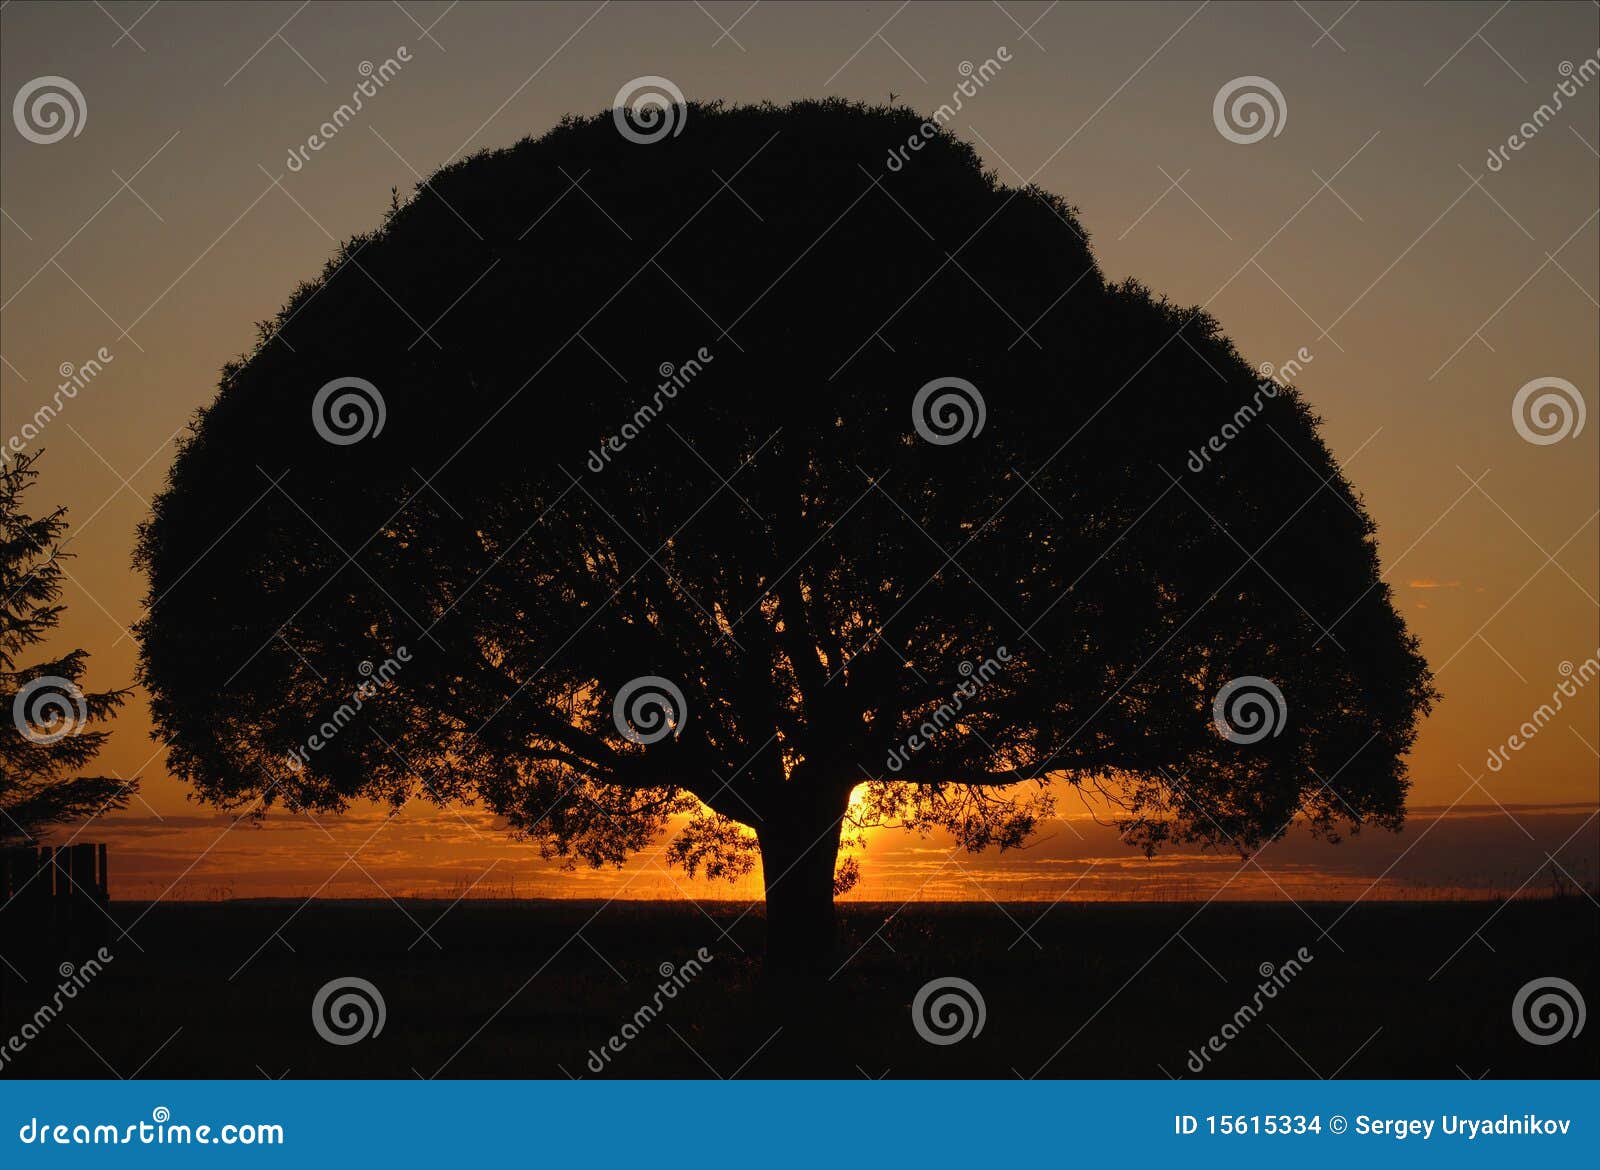 tree crone on a sunset.